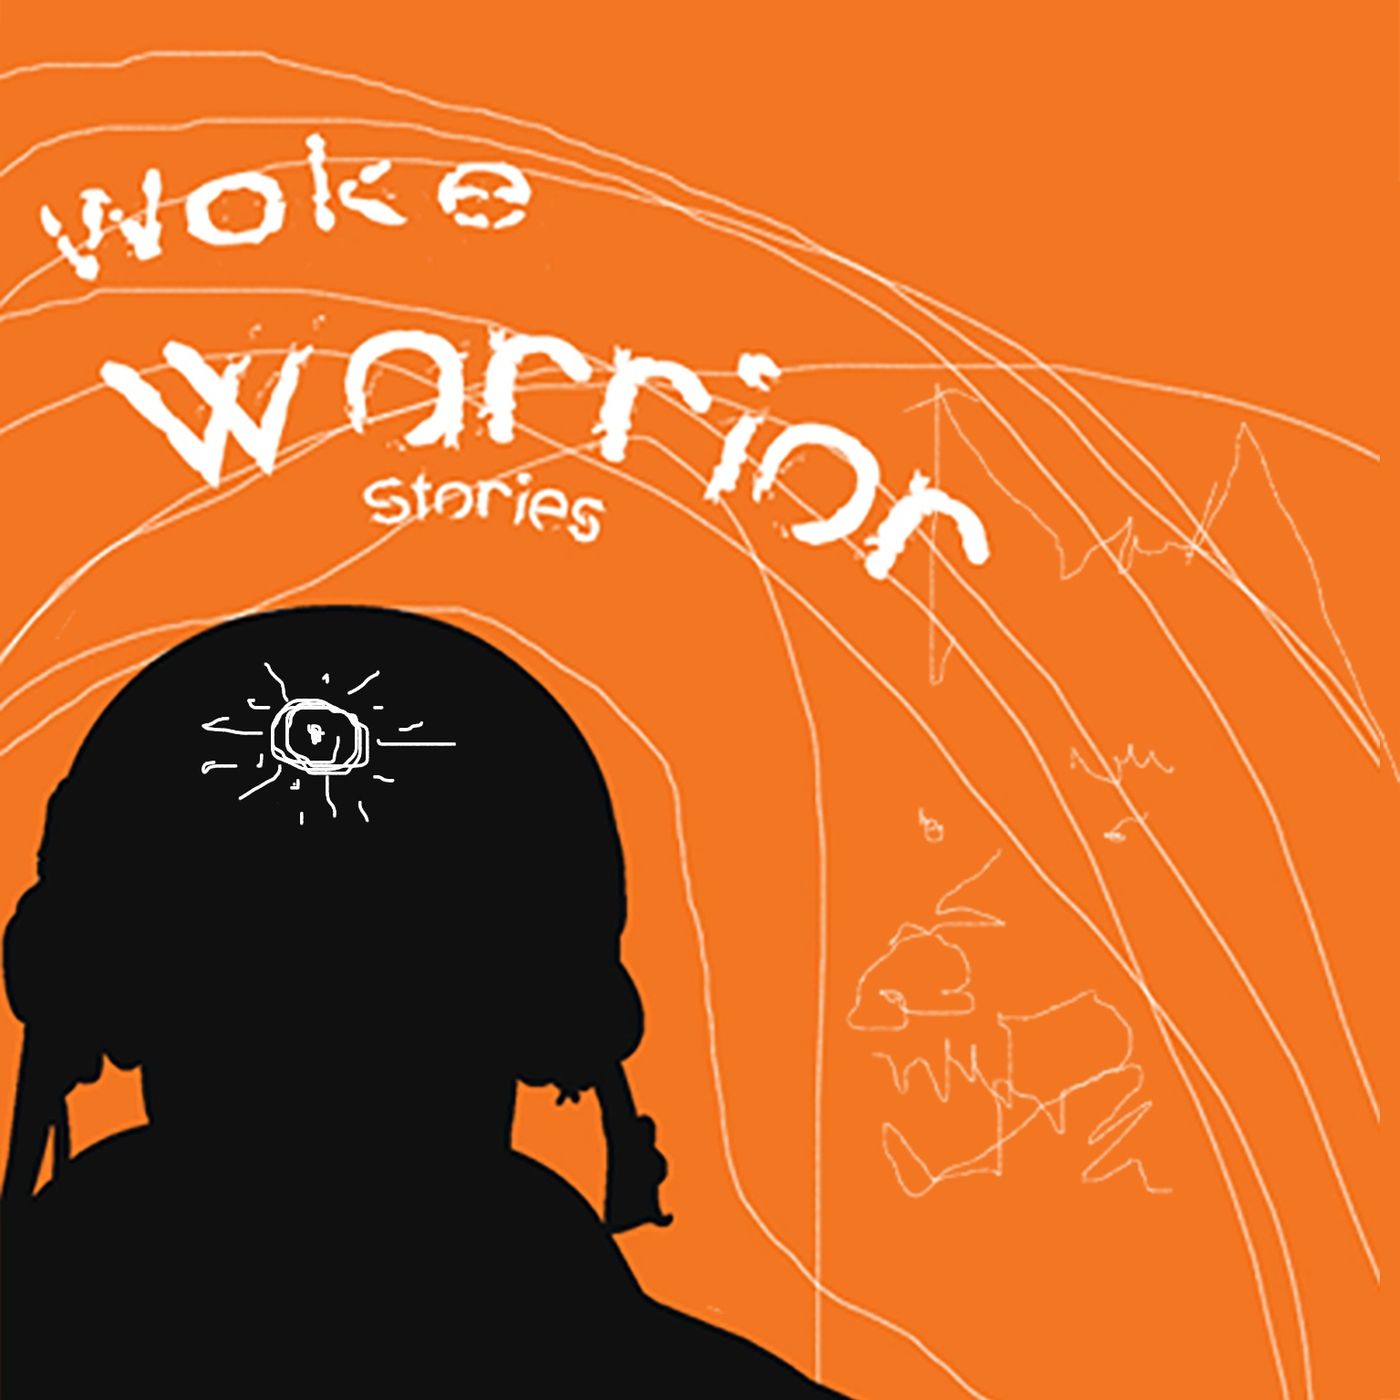 Woke Warrior Stories